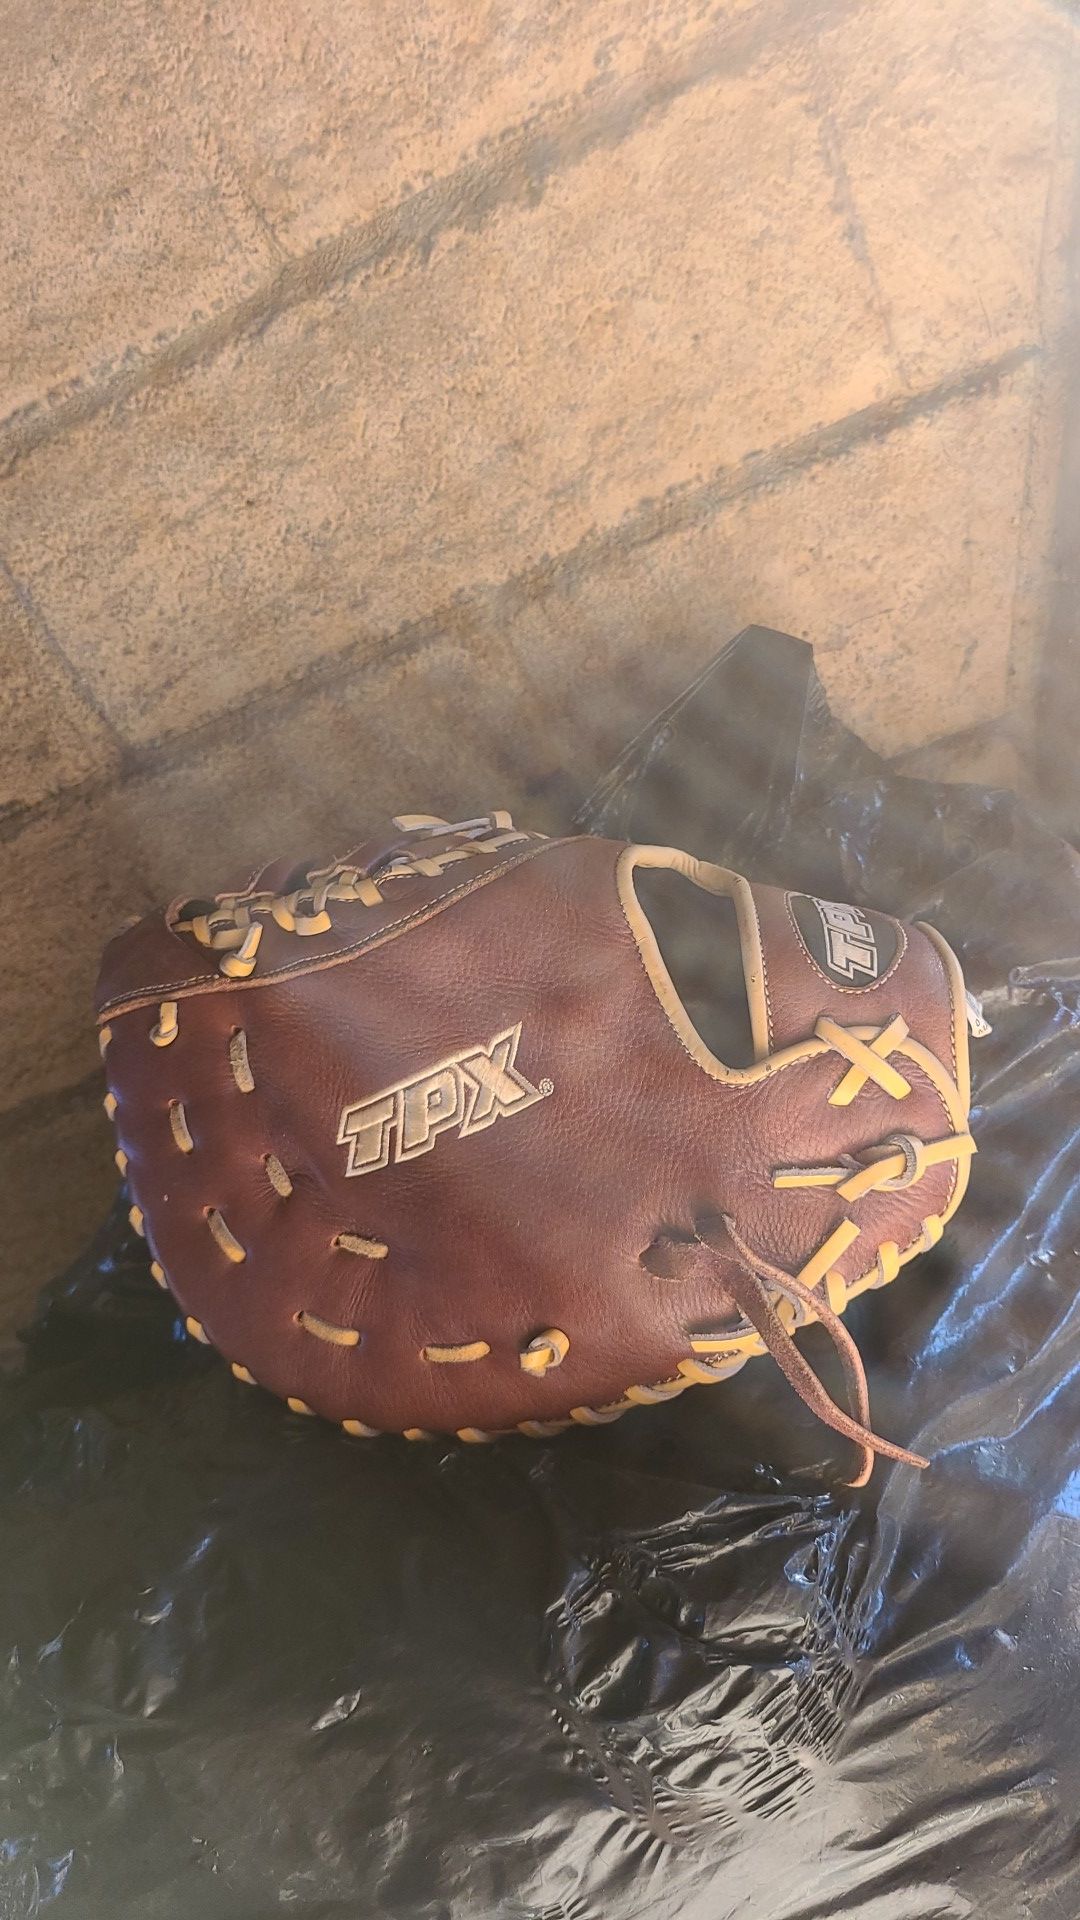 TPX Firstbaseman baseball glove brand new